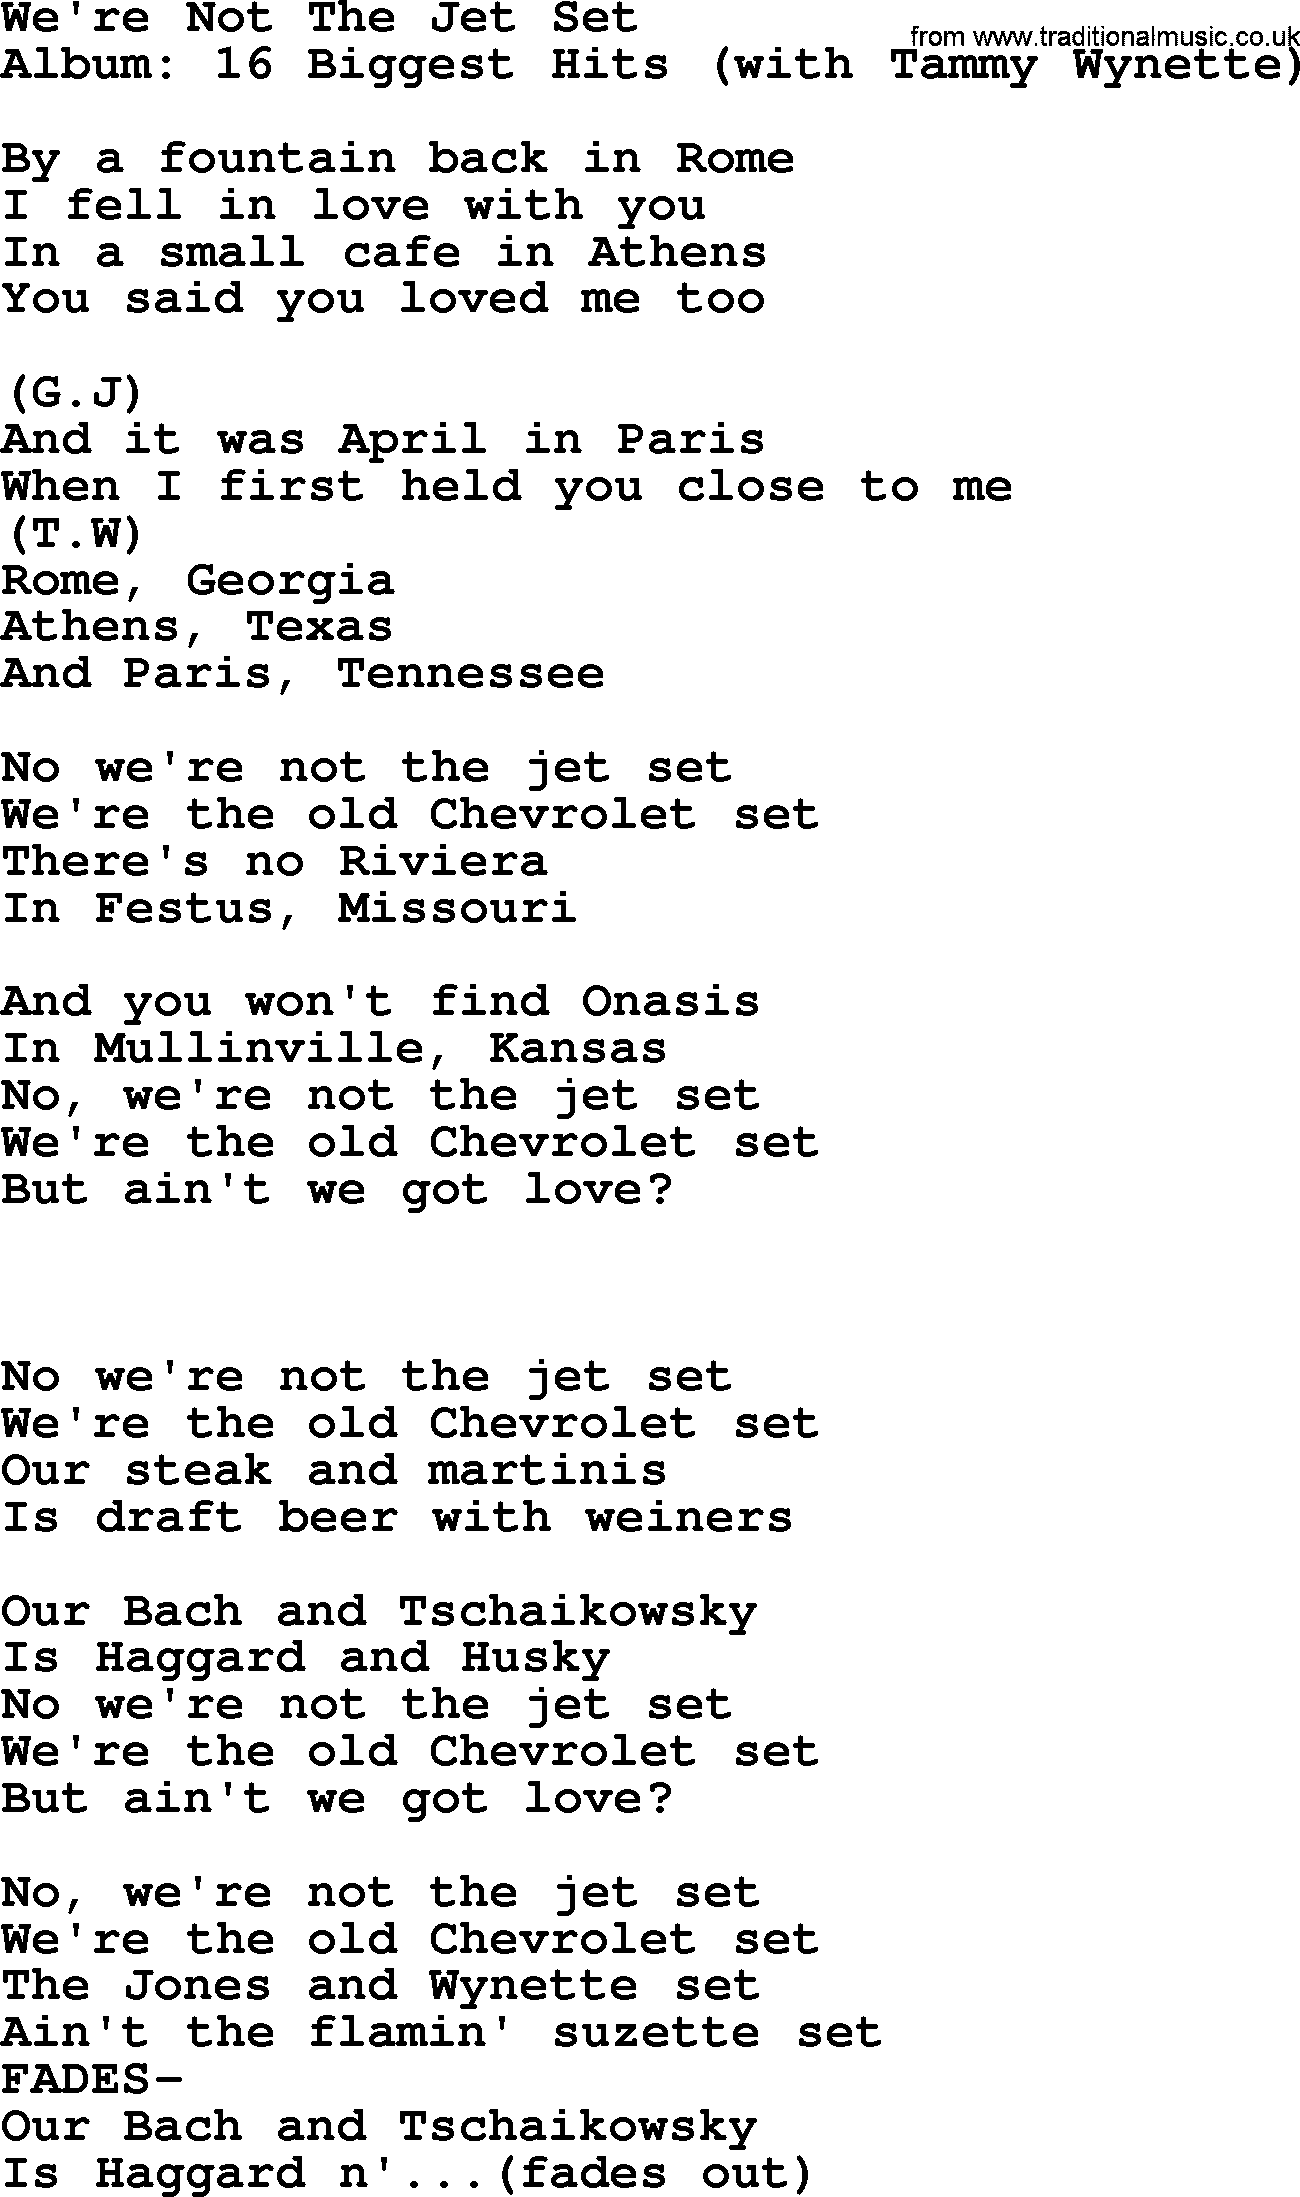 George Jones song: We're Not The Jet Set, lyrics